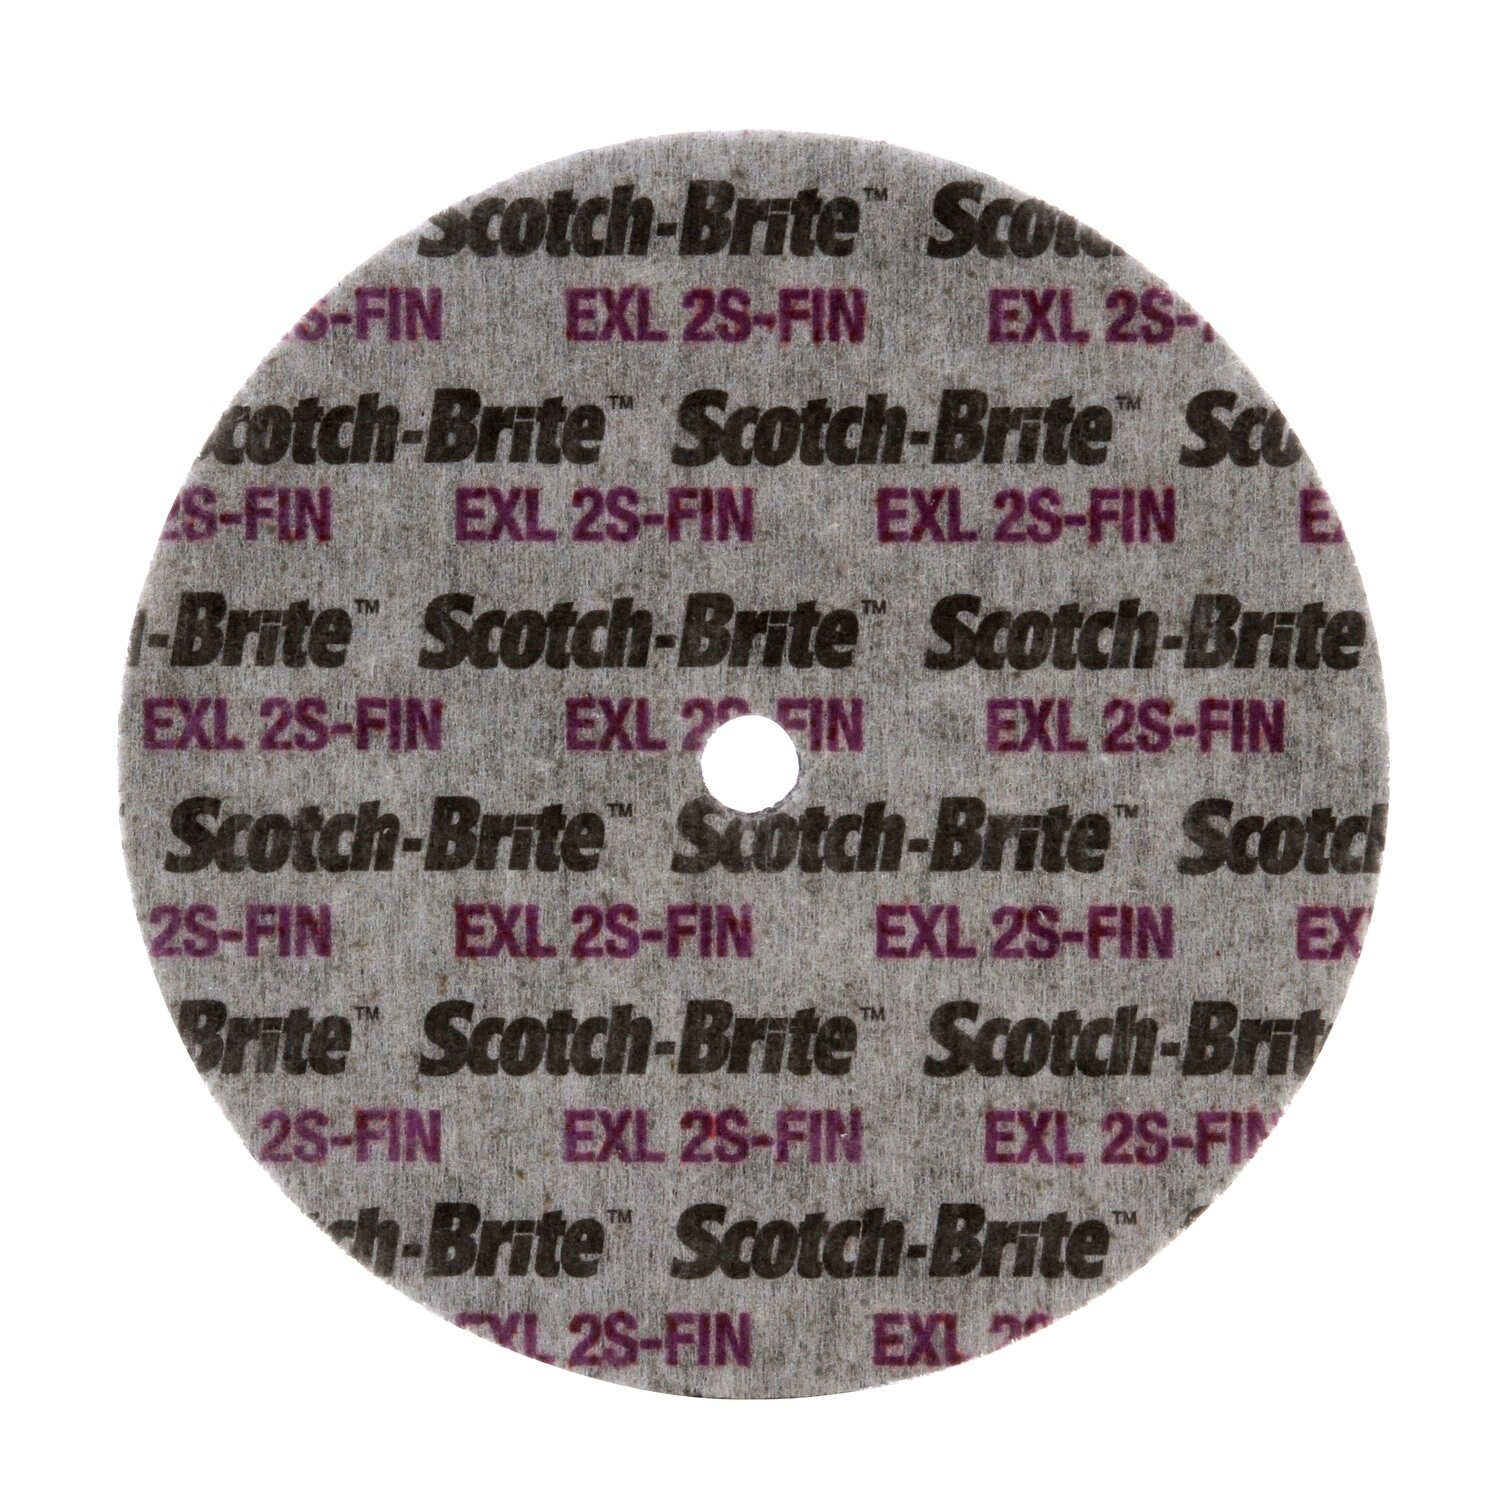 7100188512 - Scotch-Brite EXL Unitized Wheel, XL-UW, 2S Fine, 8 in x 1/4 in x 3 in,
SPR22071A, 8 ea/Case